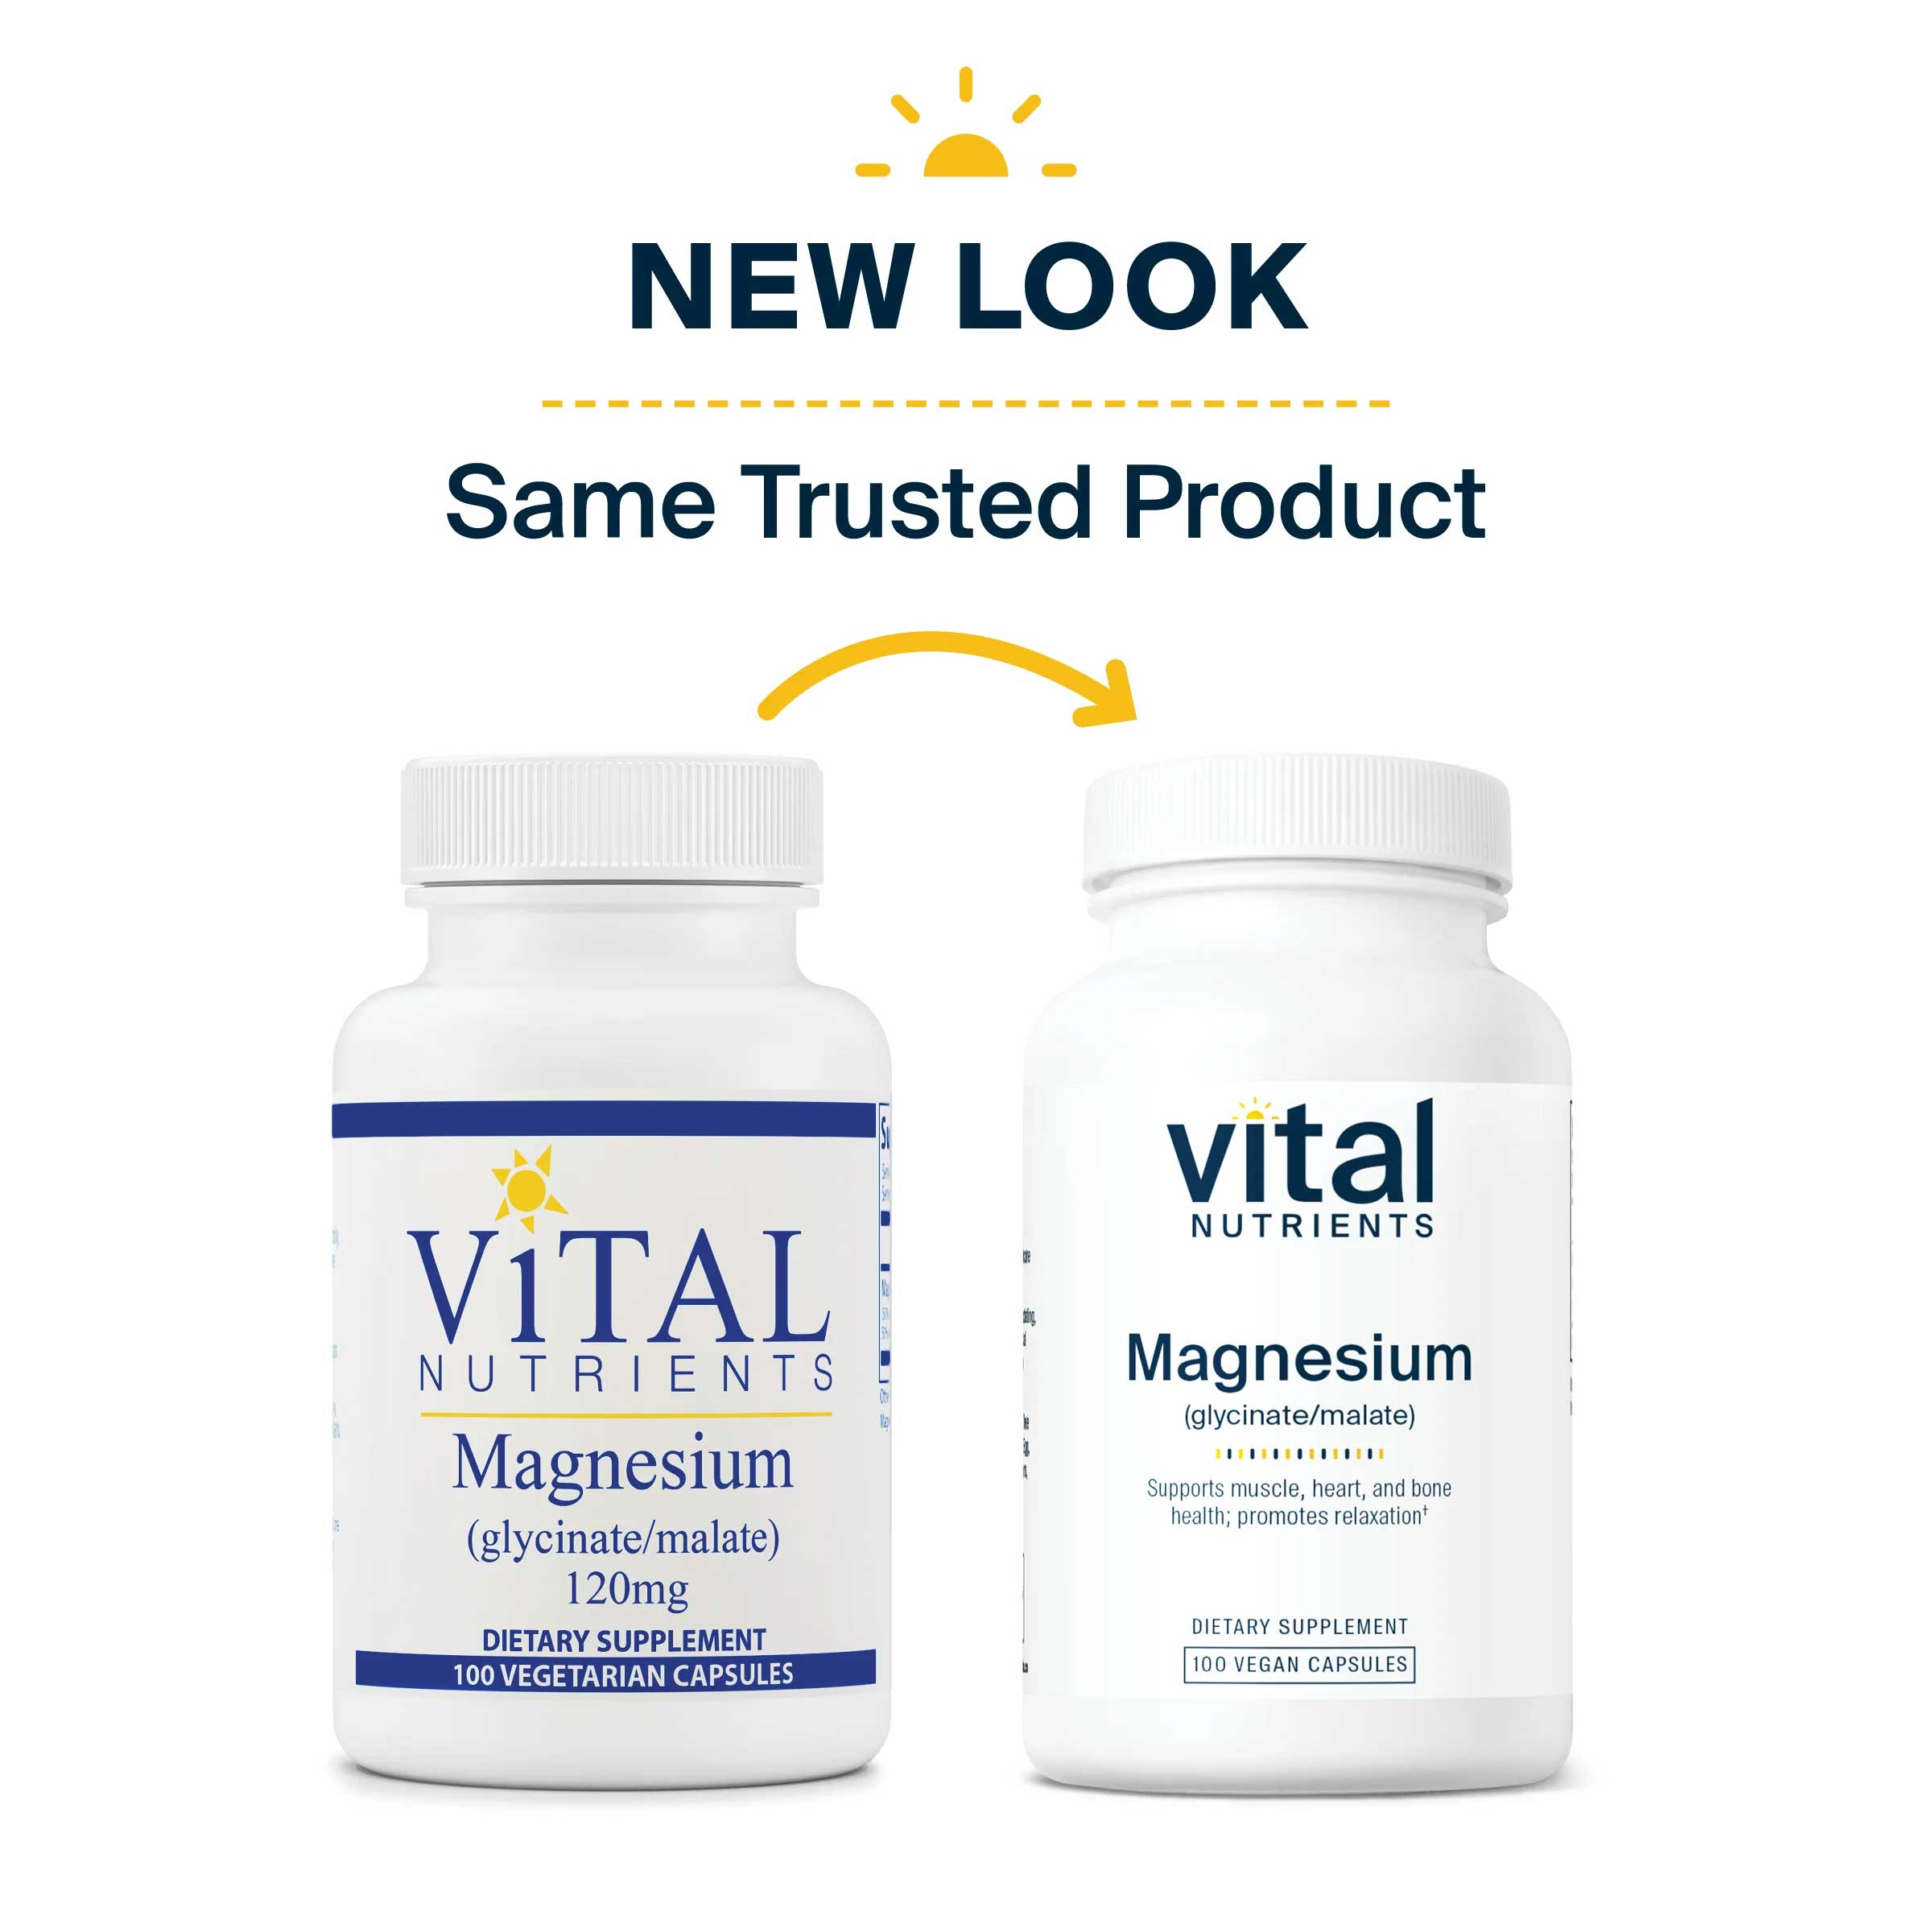 Vital Nutrients Magnesium (glycinate/malate) New Look